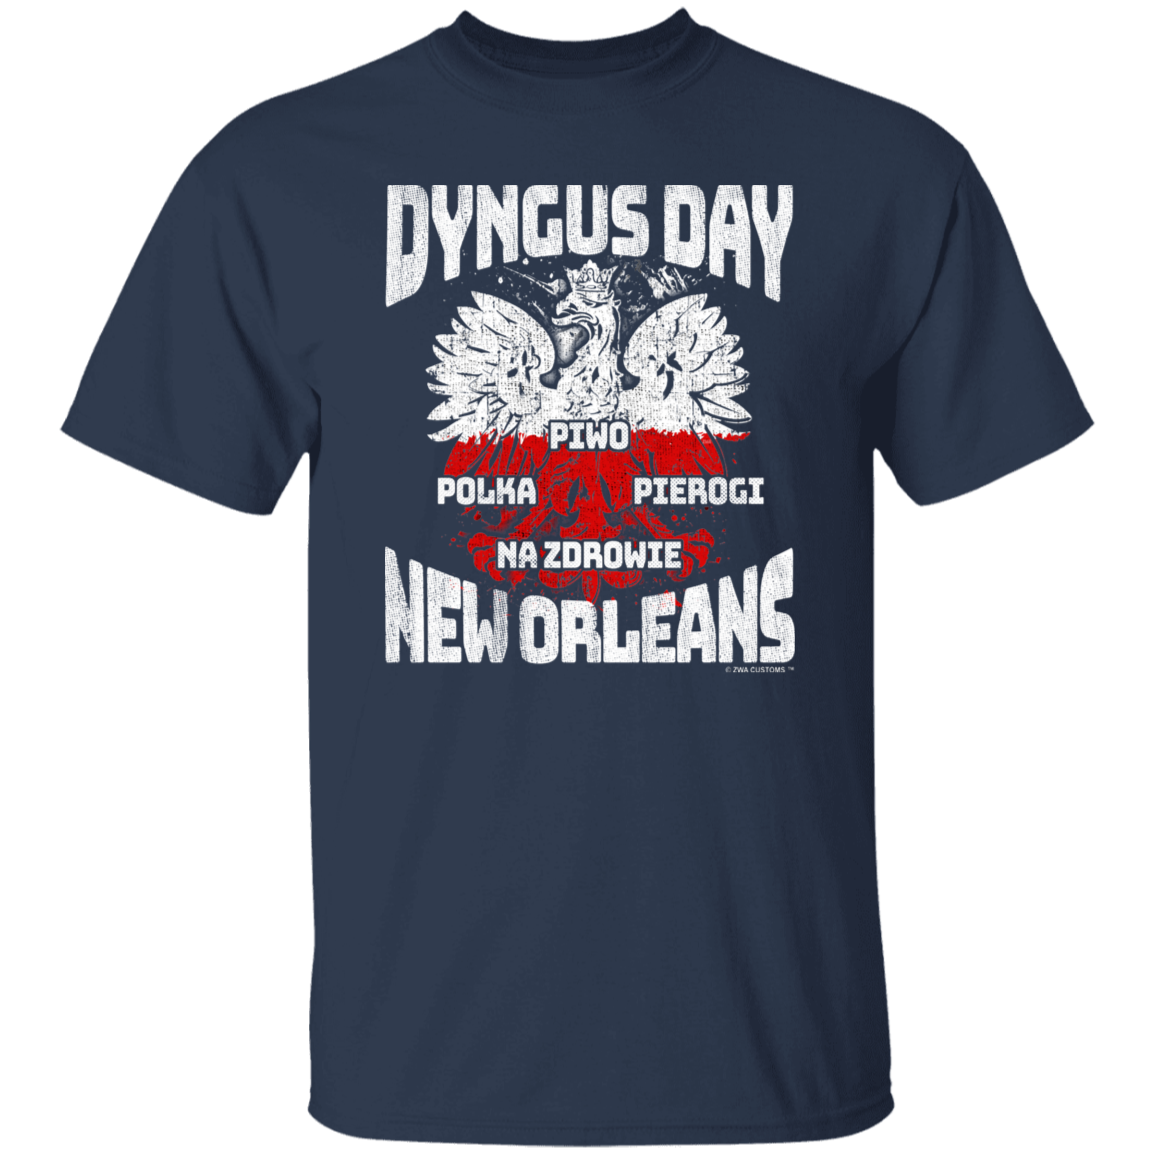 Dyngus Day New Orleans Apparel CustomCat G500 5.3 oz. T-Shirt Navy S